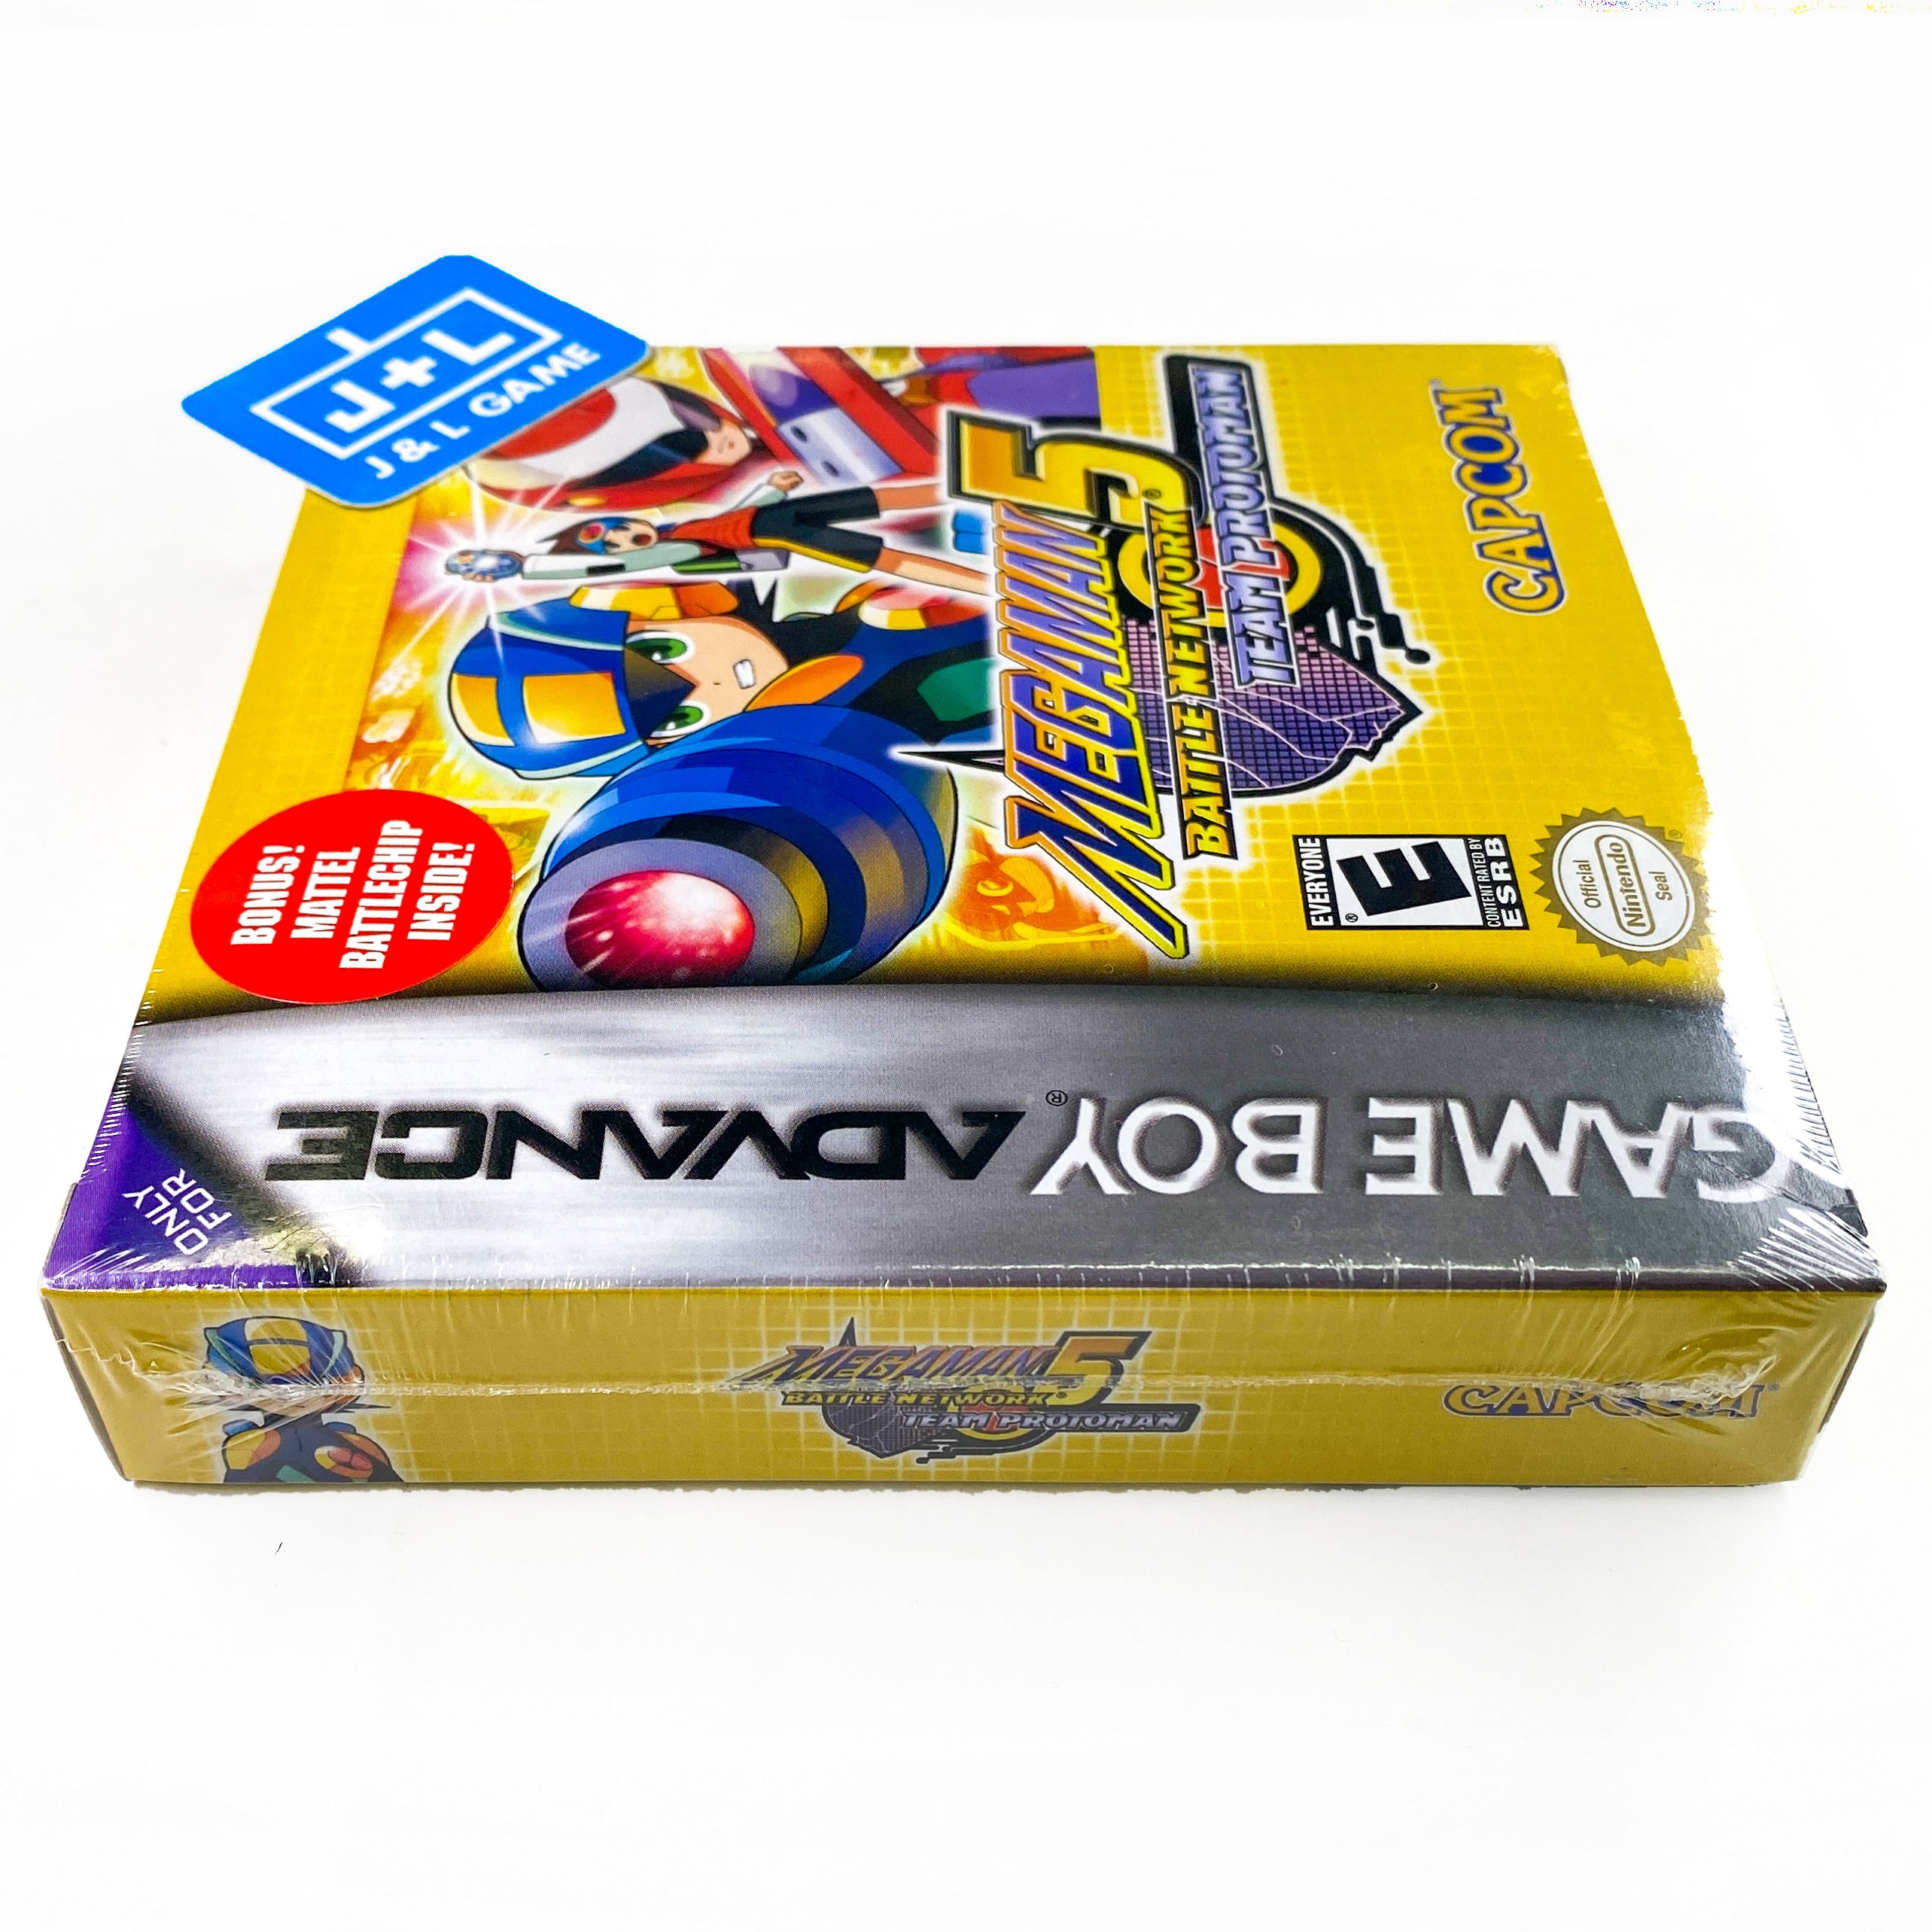 Mega Man Battle Network 5: Team Protoman - (GBA) Game Boy Advance Video Games Capcom   